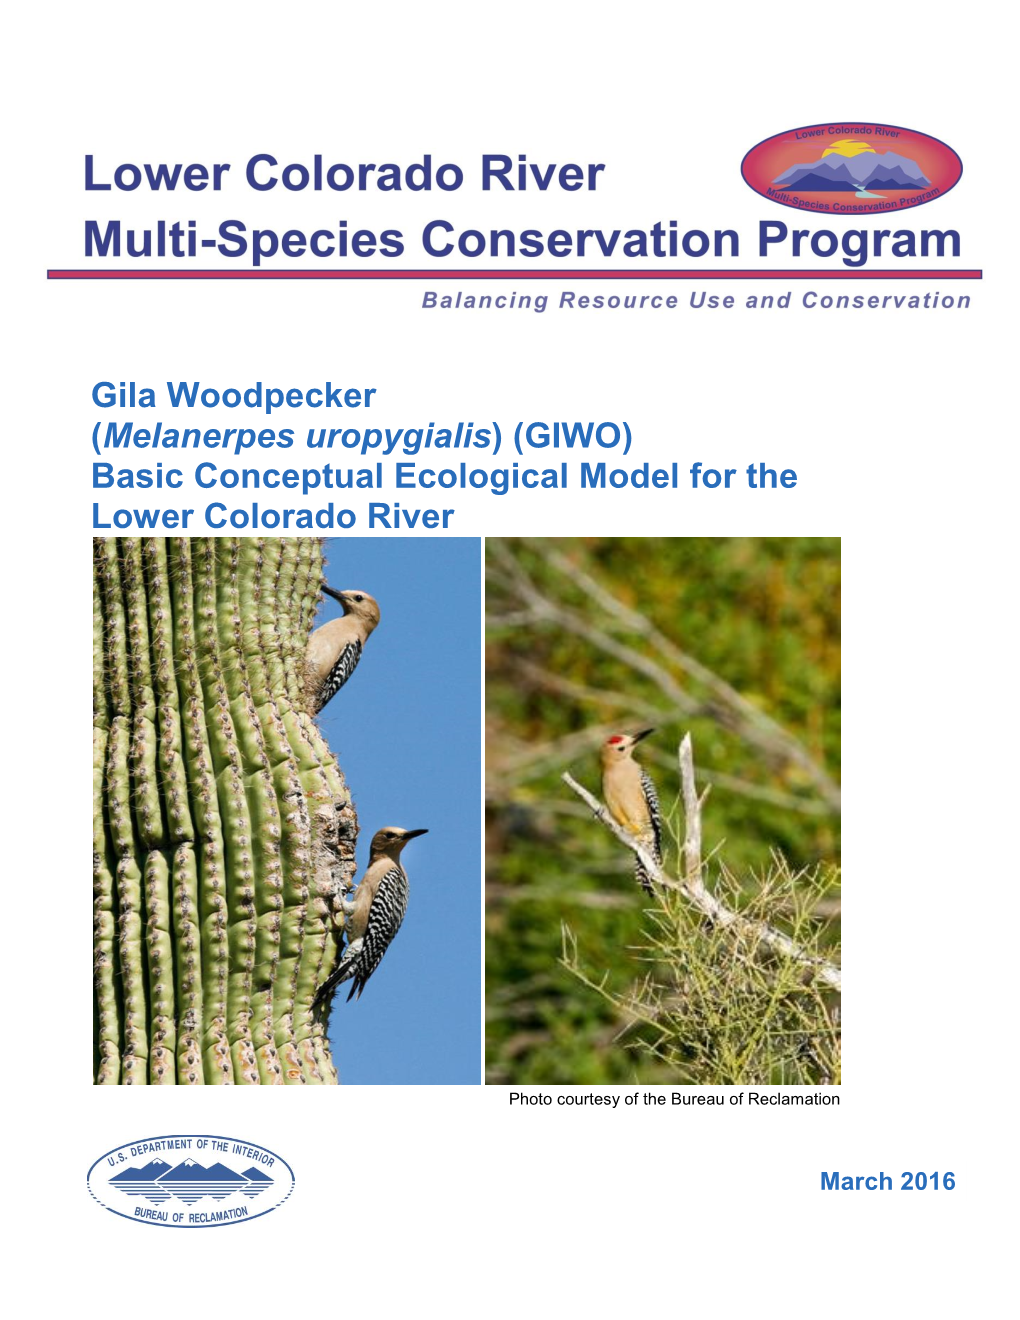 Gila Woodpecker (Melanerpes Uropygialis) (GIWO) Basic Conceptual Ecological Model for the Lower Colorado River